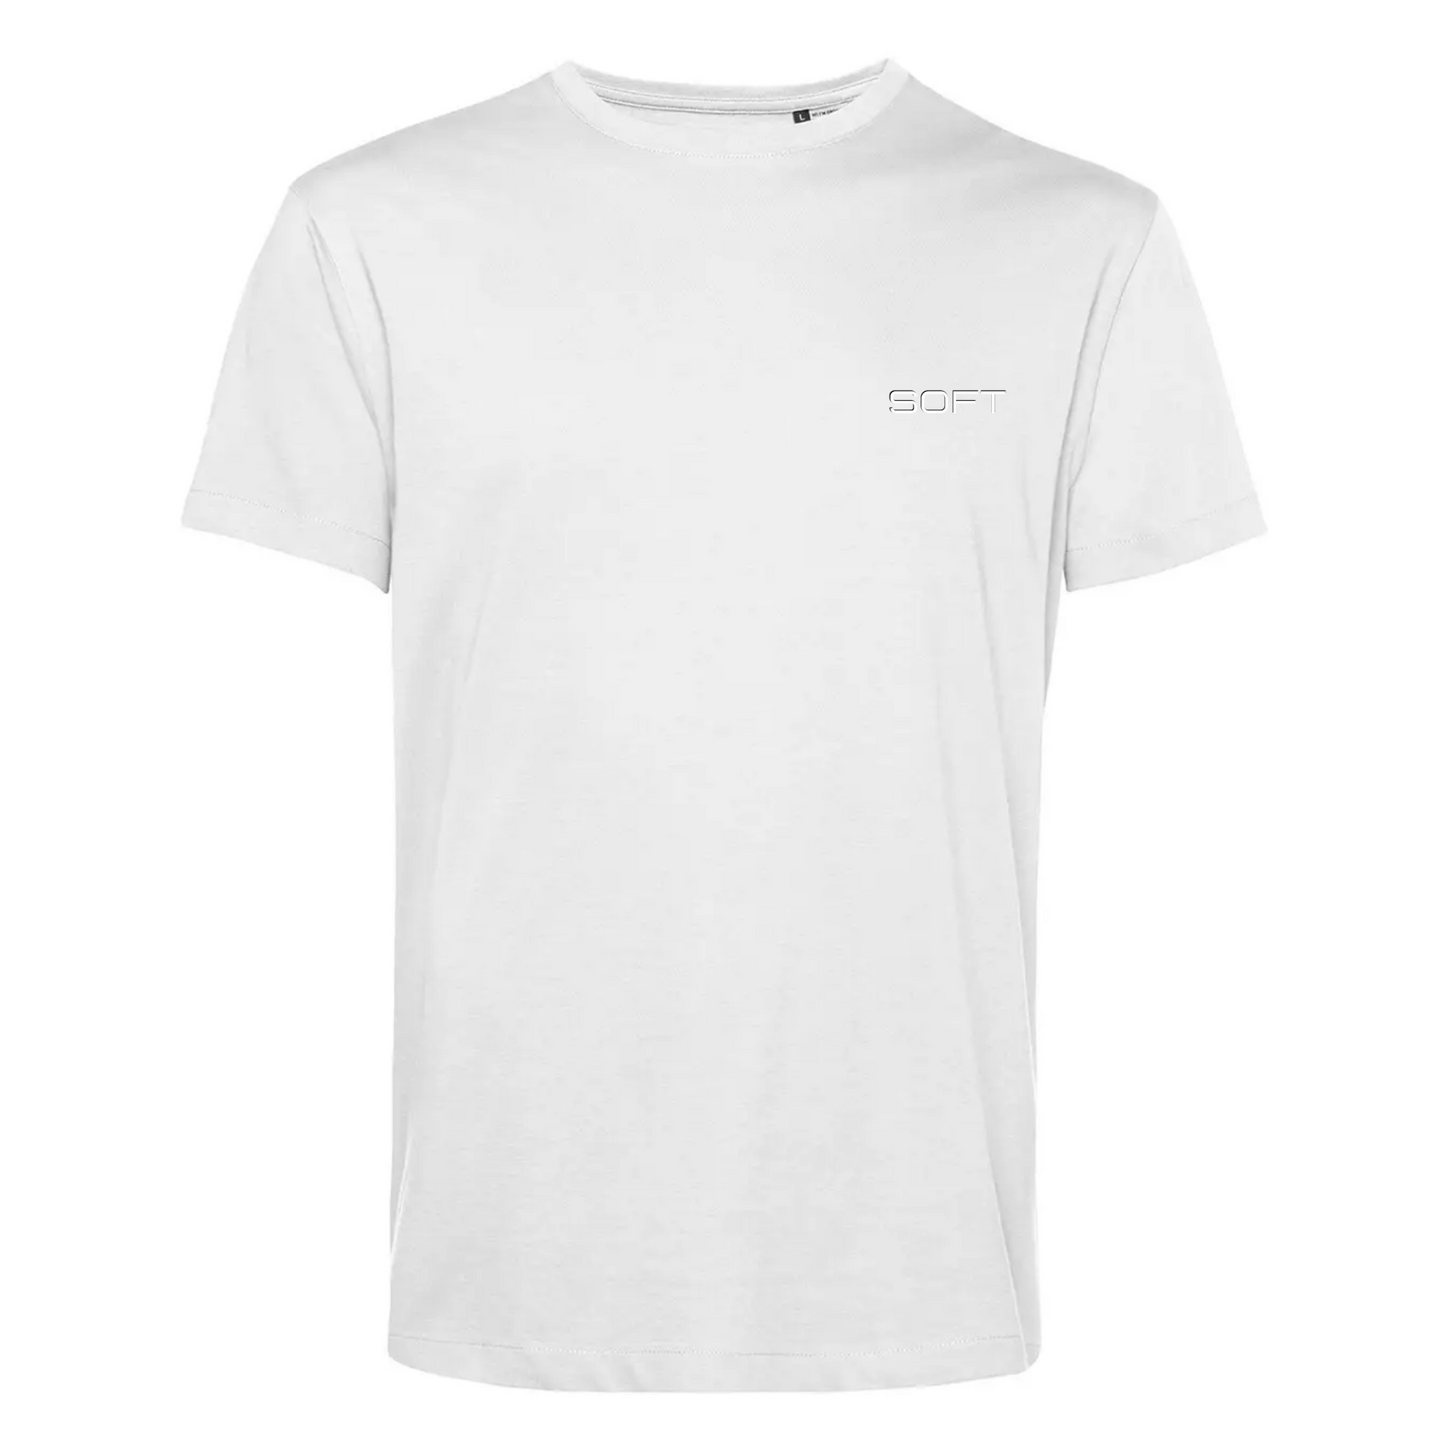 T-Shirt Homme Blanc - Broderie Coeur